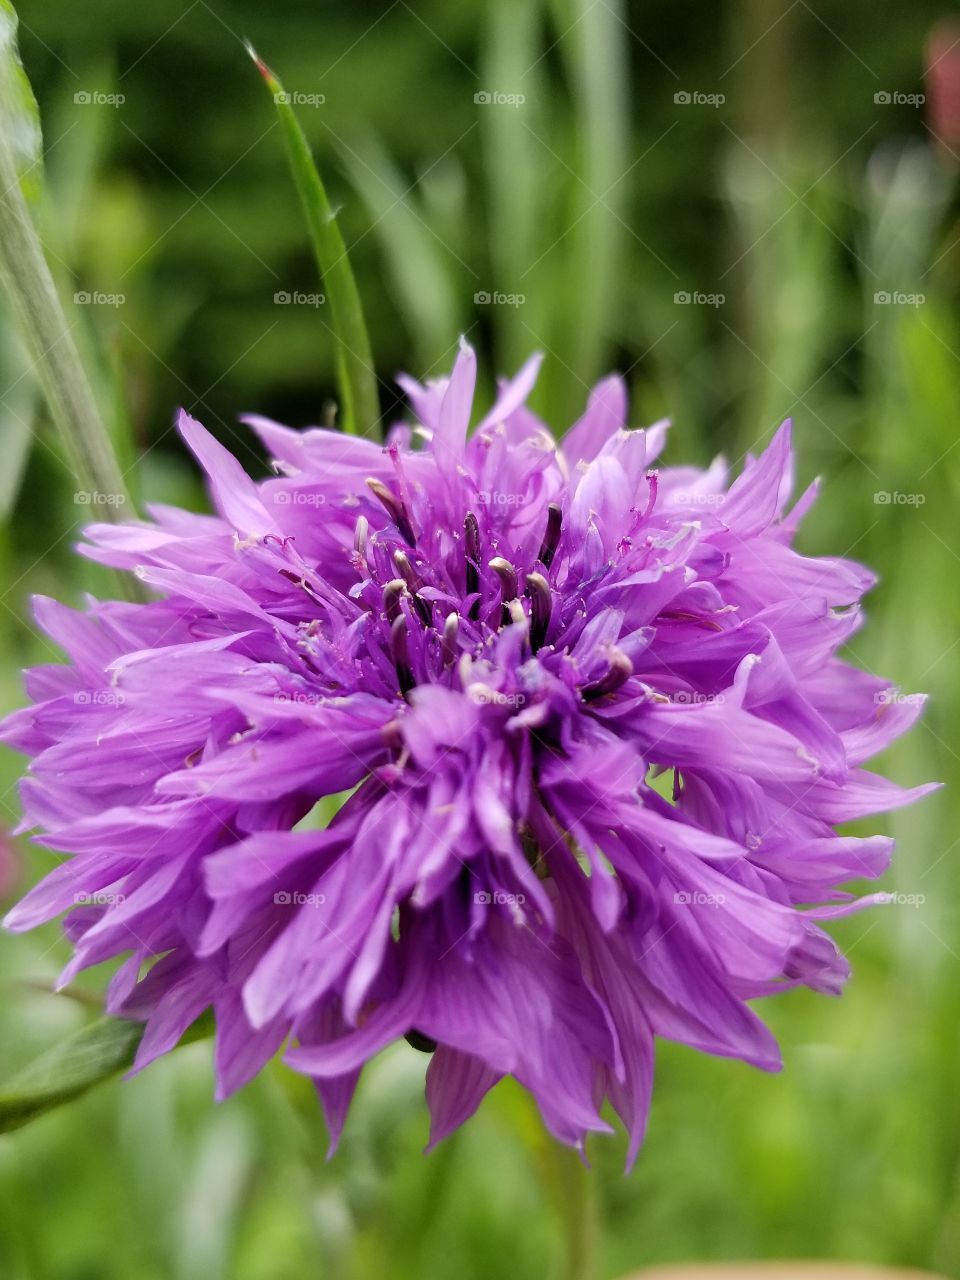 Purple flowers close up